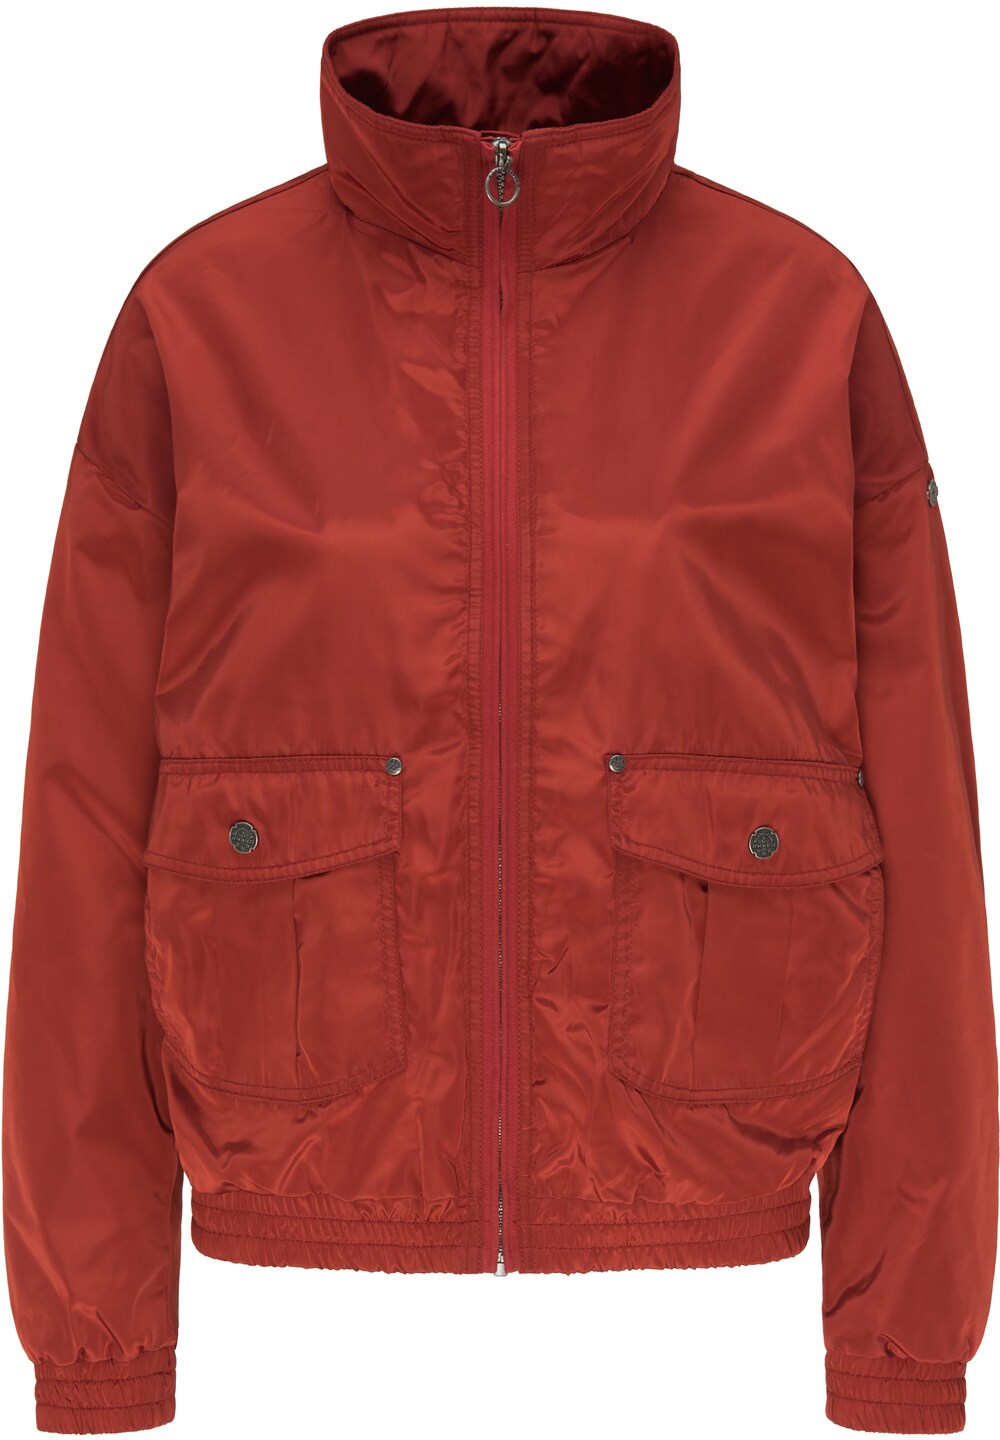 Межсезонная куртка DreiMaster Vintage, ржаво-красный межсезонная куртка dreimaster vintage ржаво красный